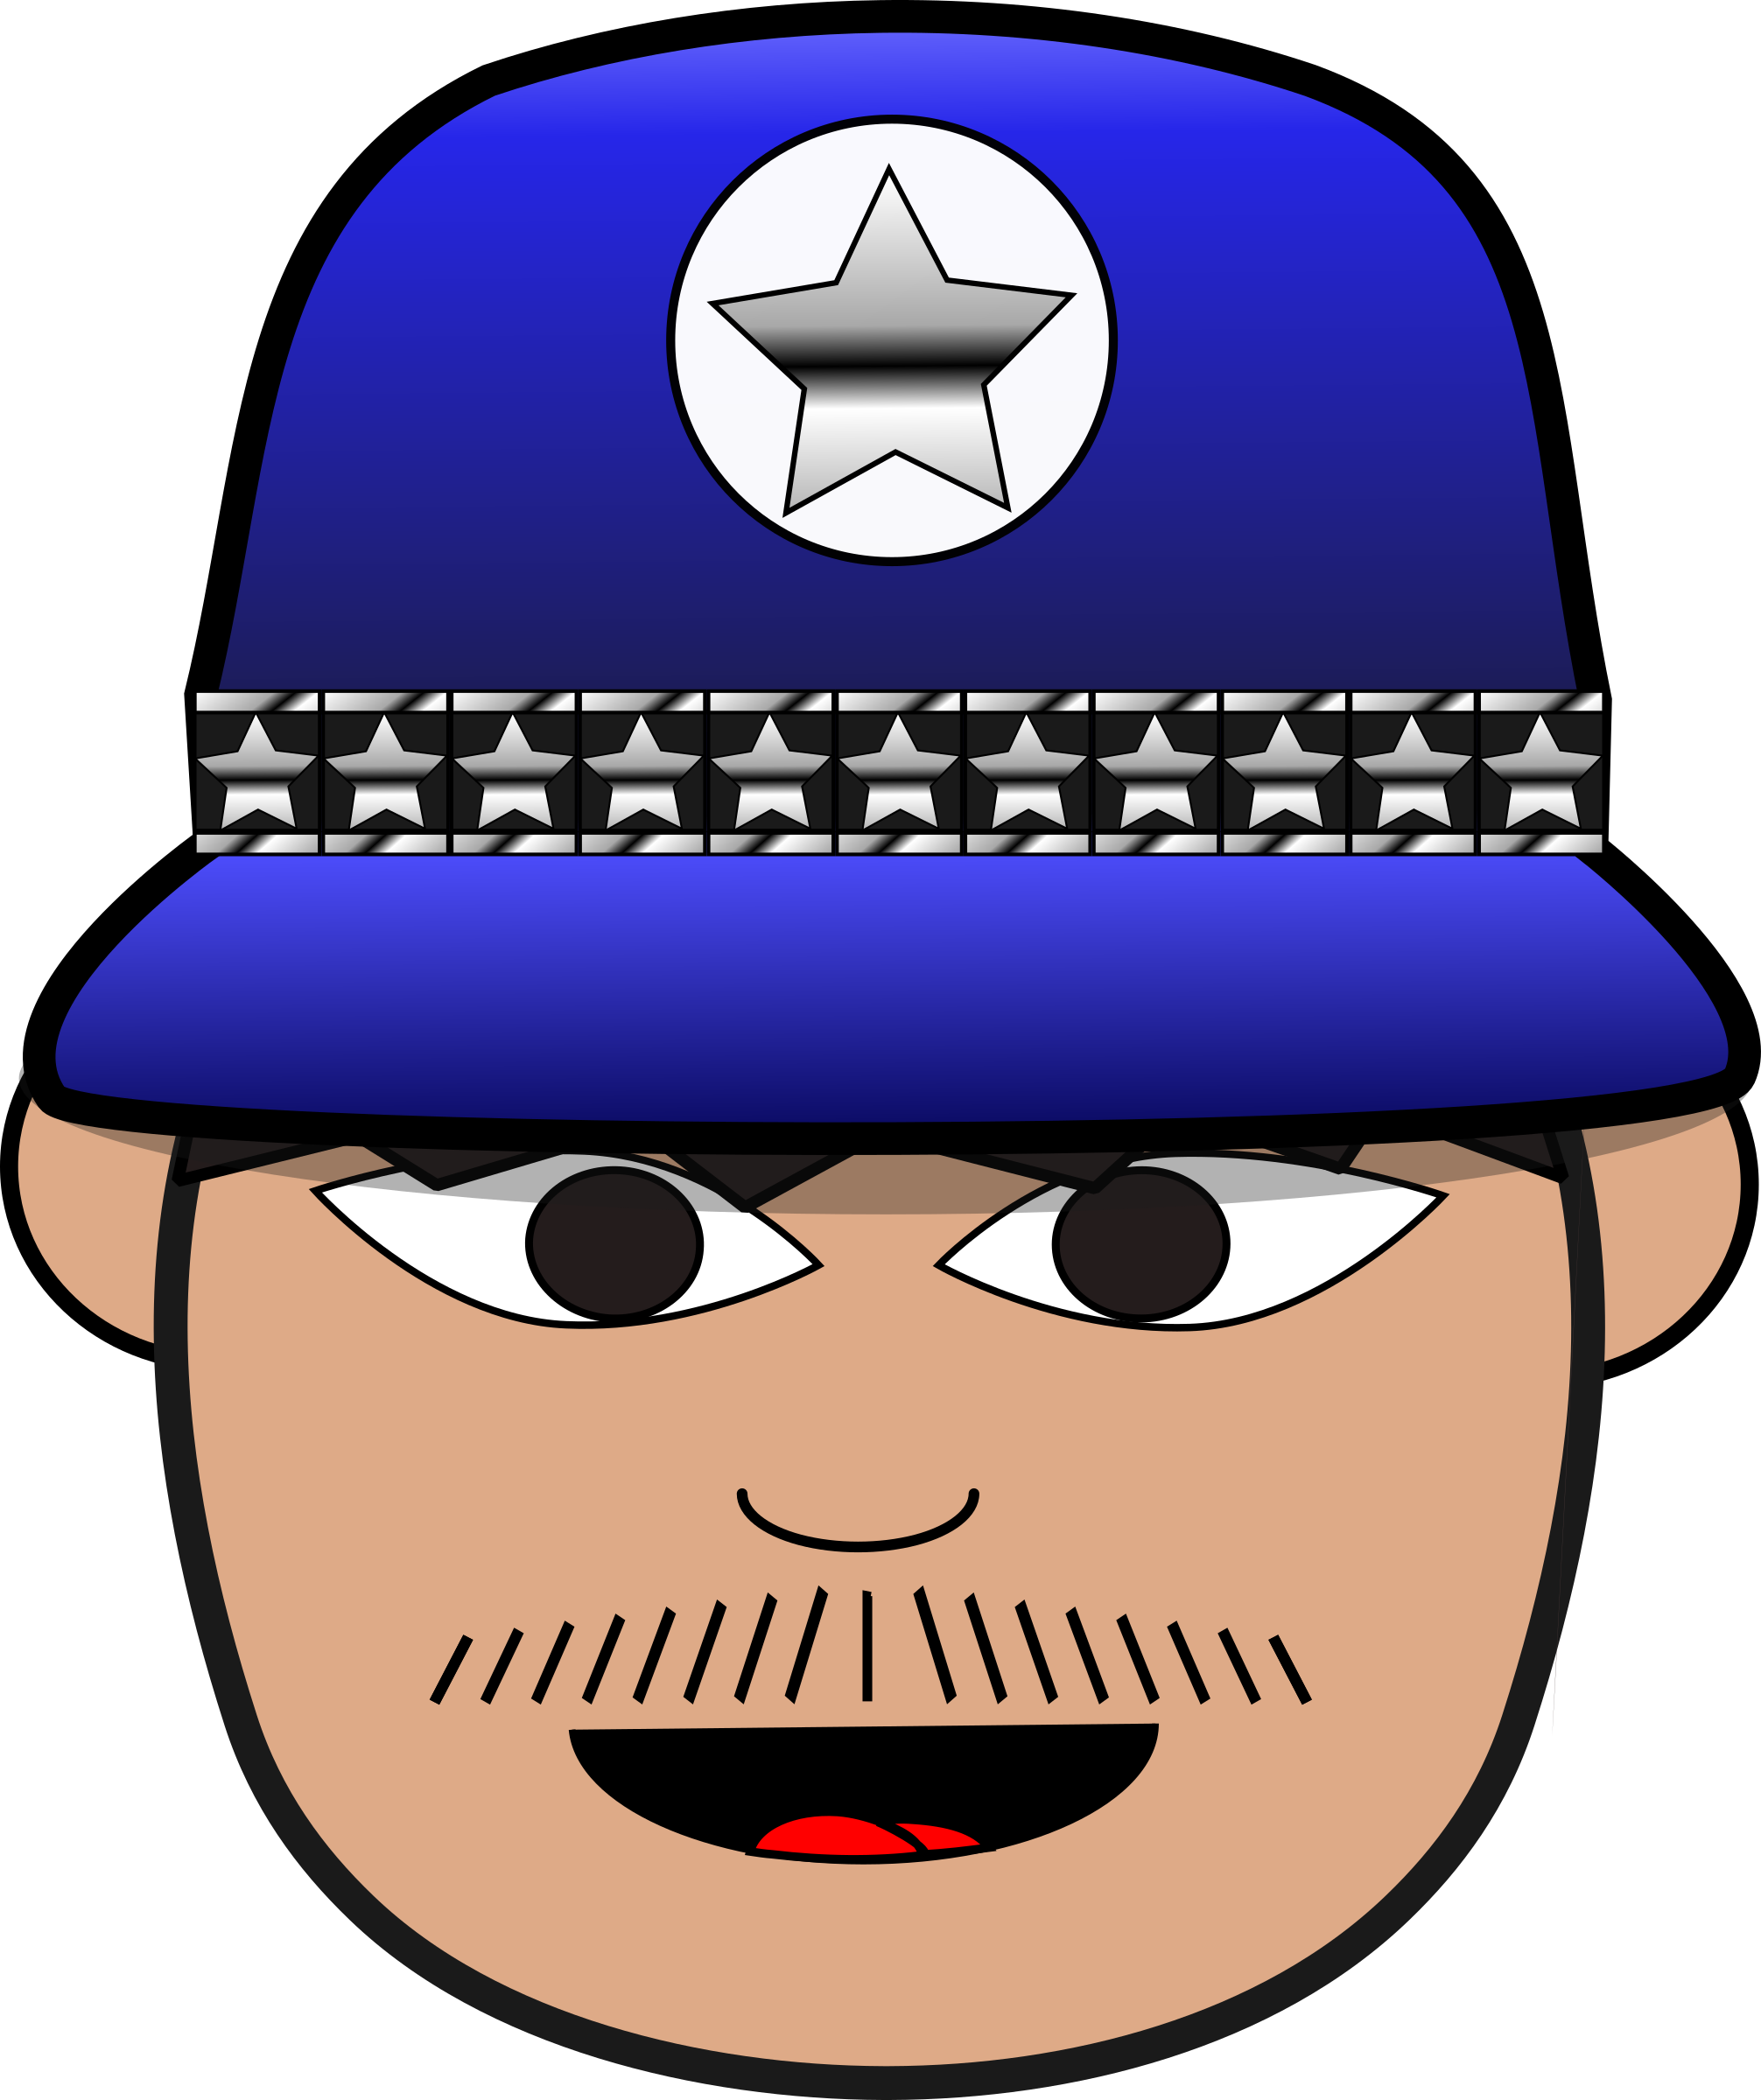 Police Man 3 - Police Face Clipart (2012x2400)